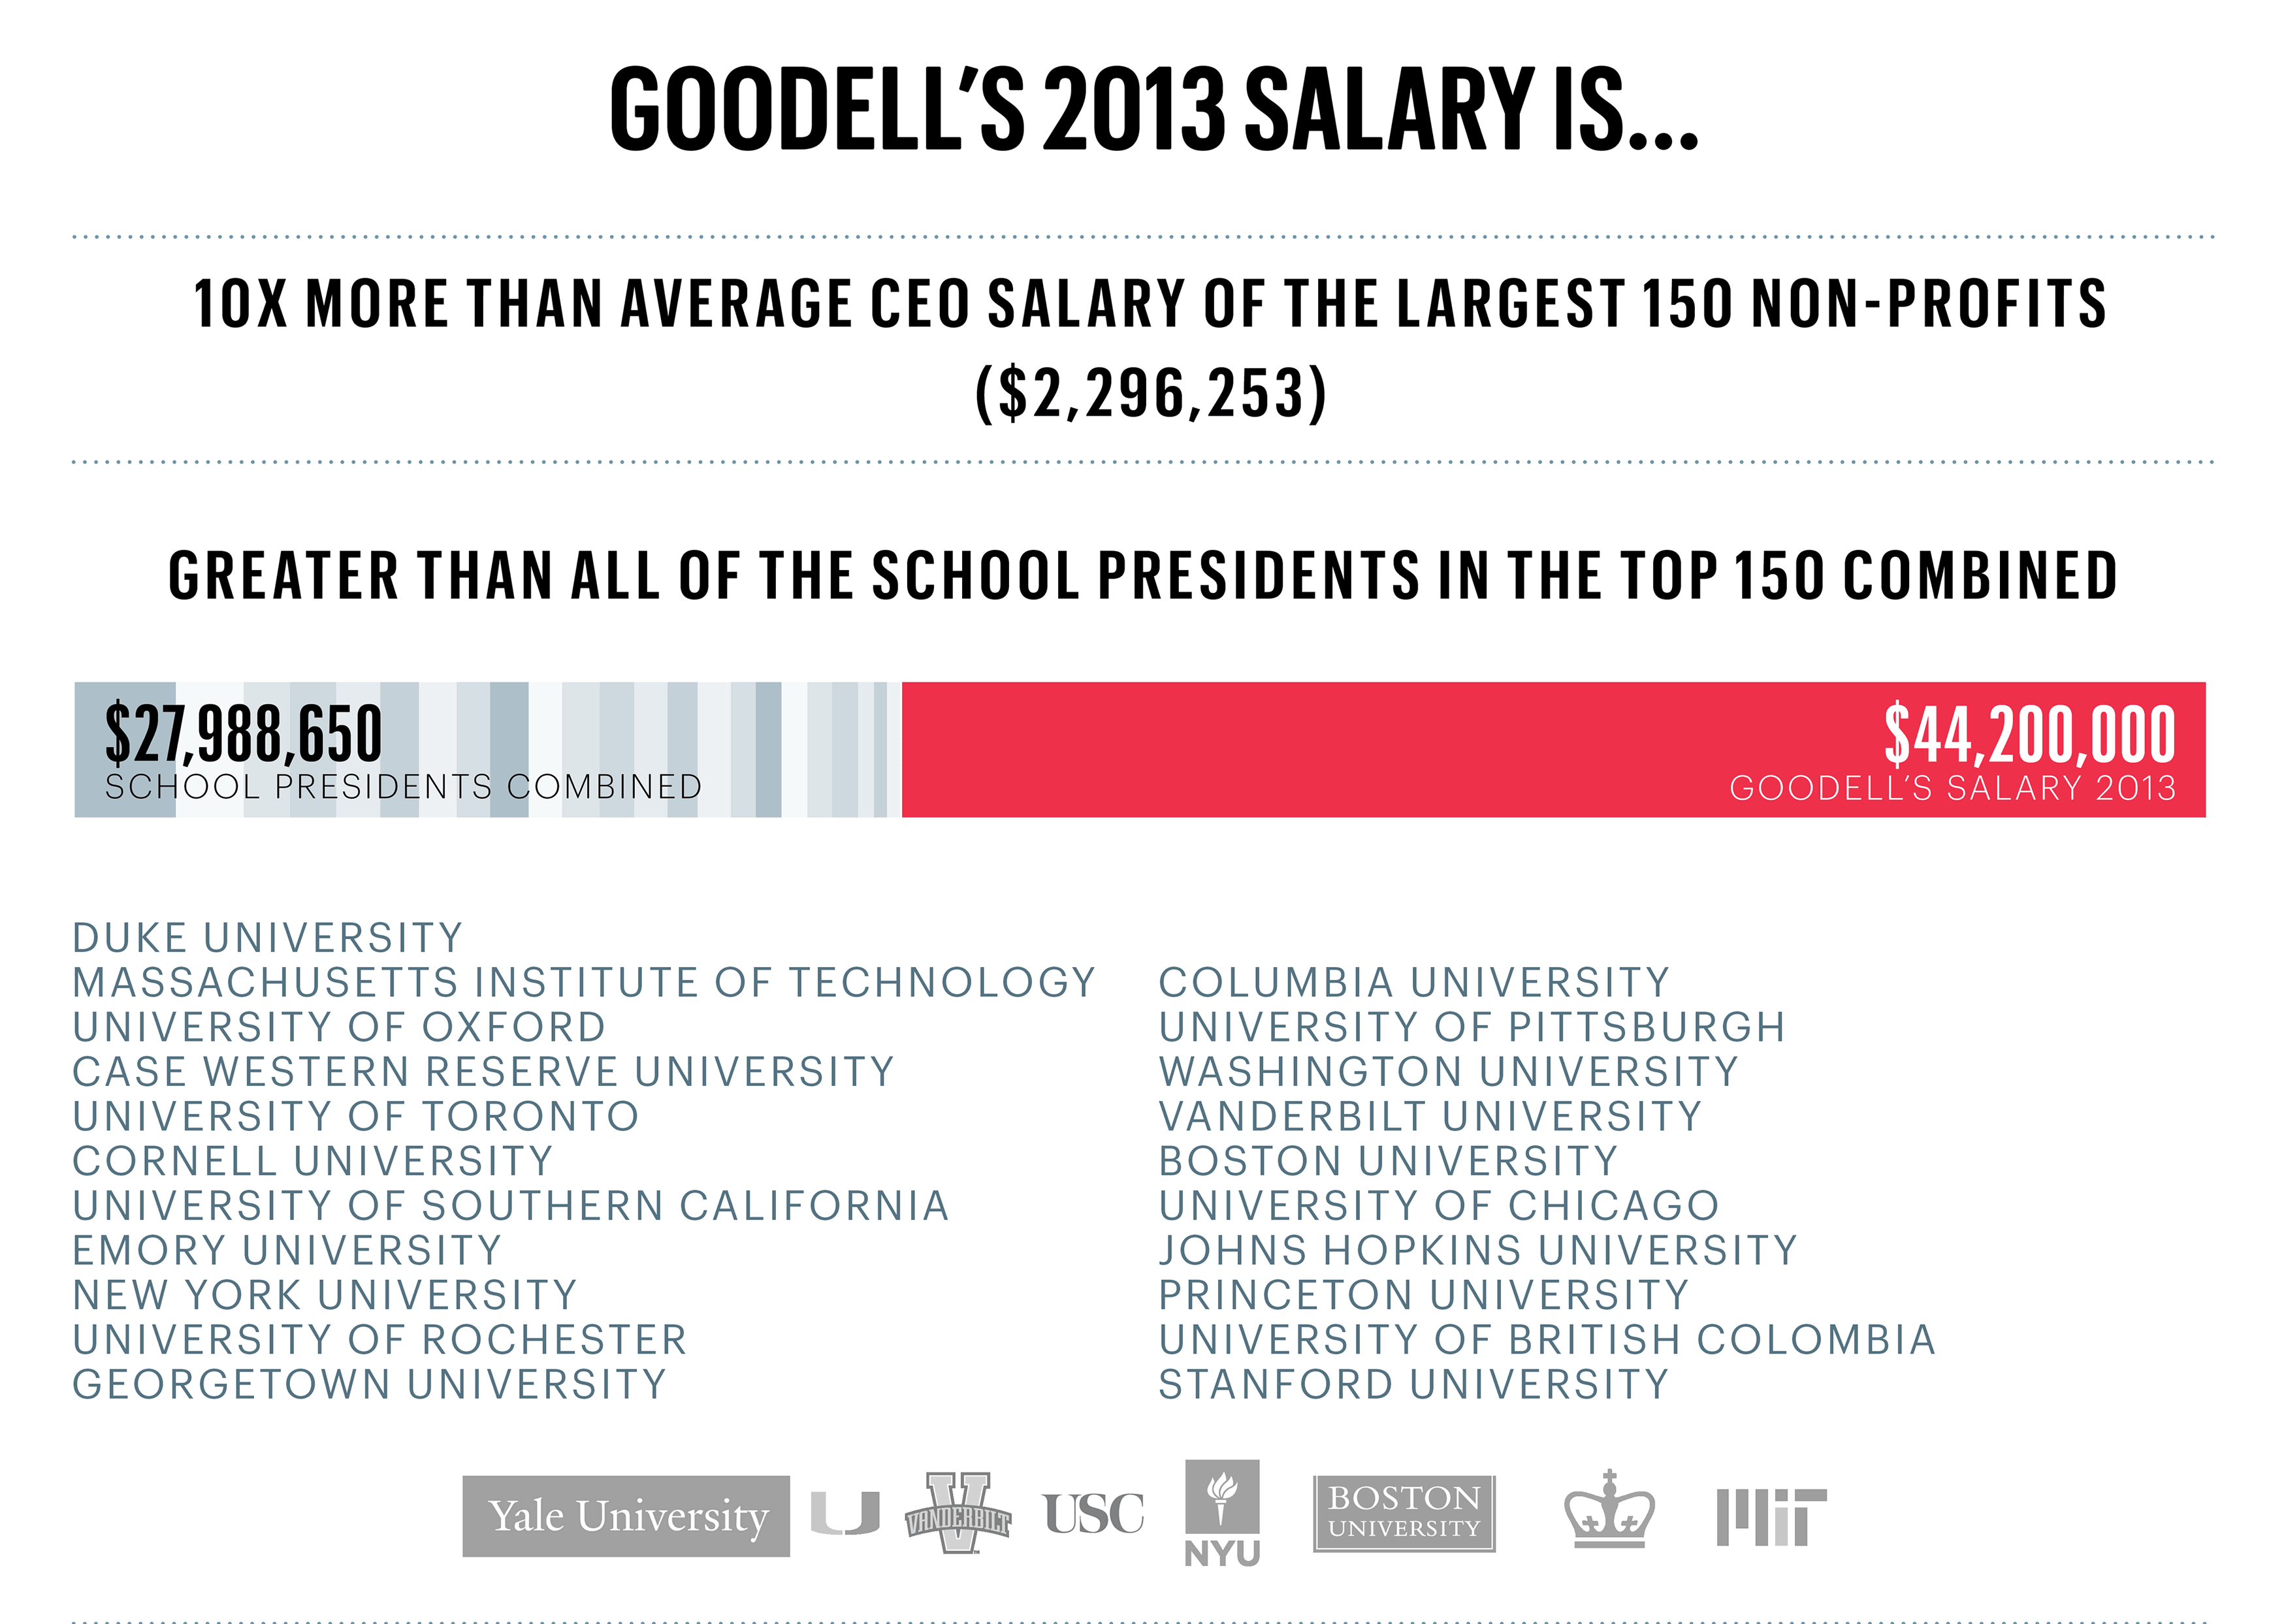 roger goodell salary and nfl revenue 2015